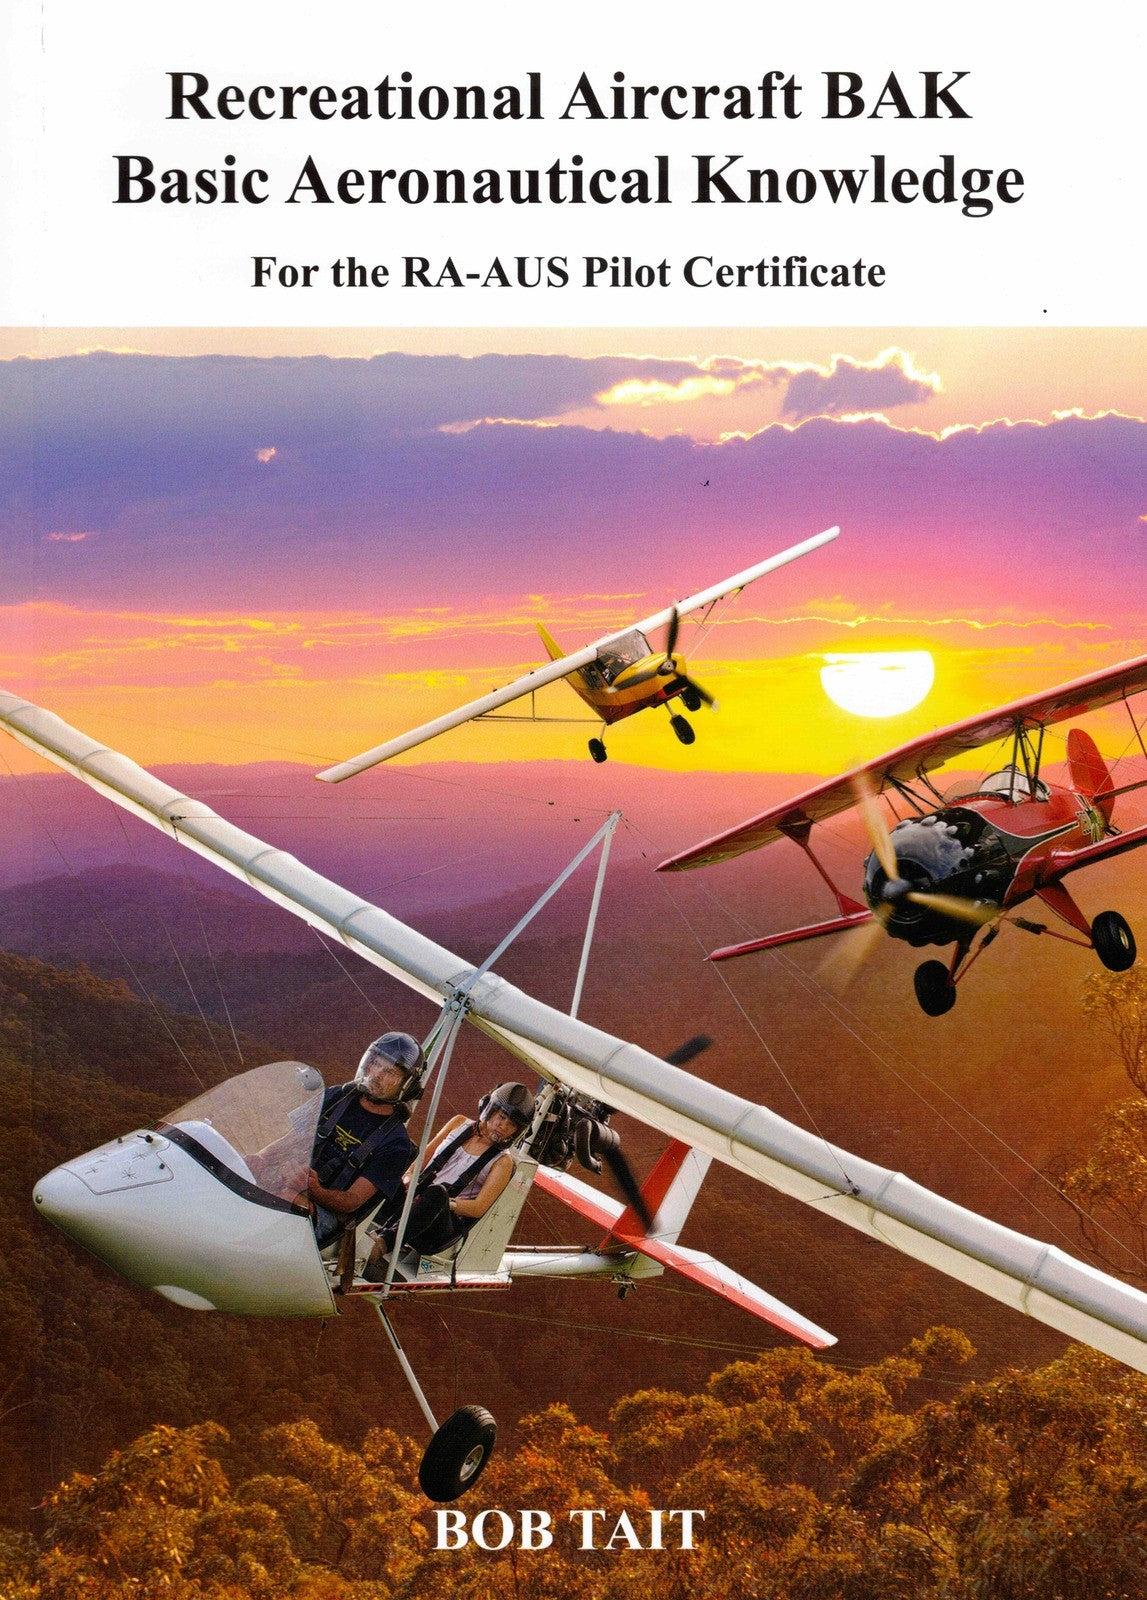 Bob Tait BAK for the RAA-AUS Pilot Certificate